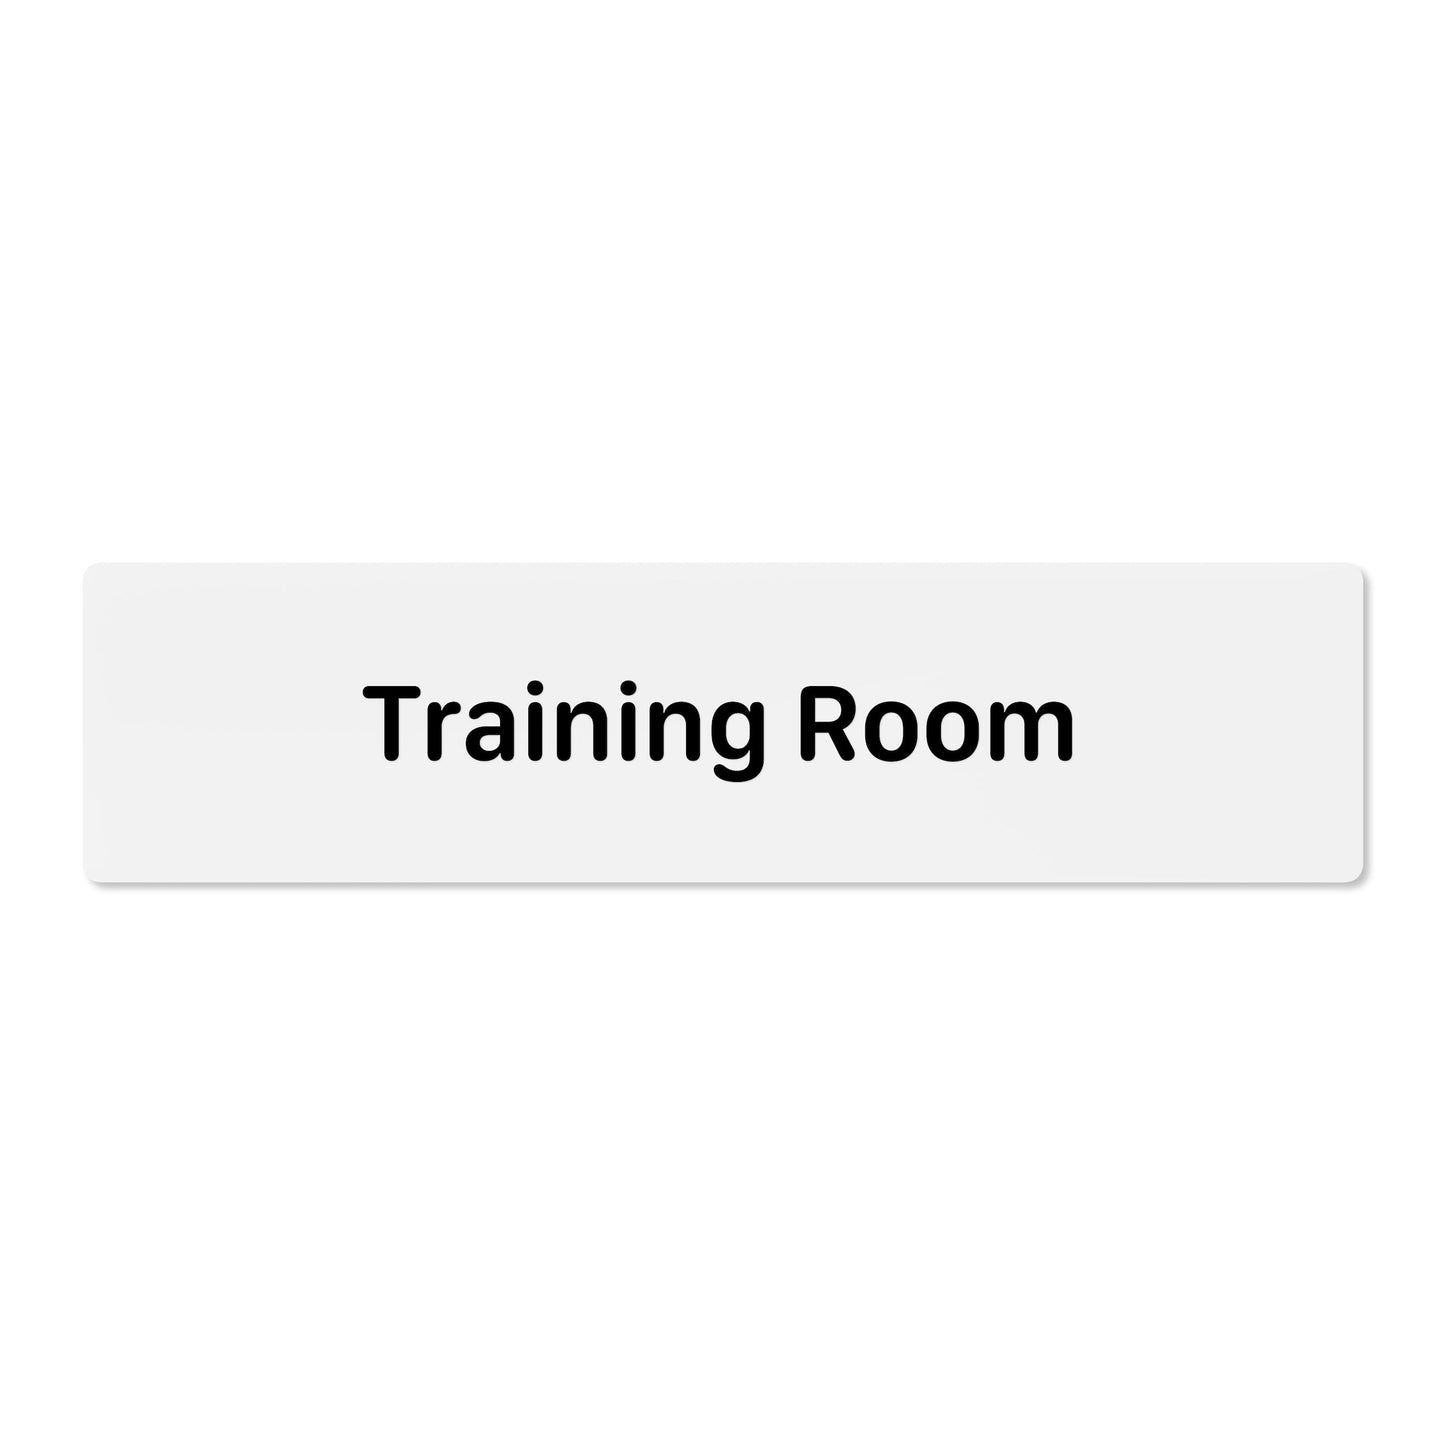 Training Room